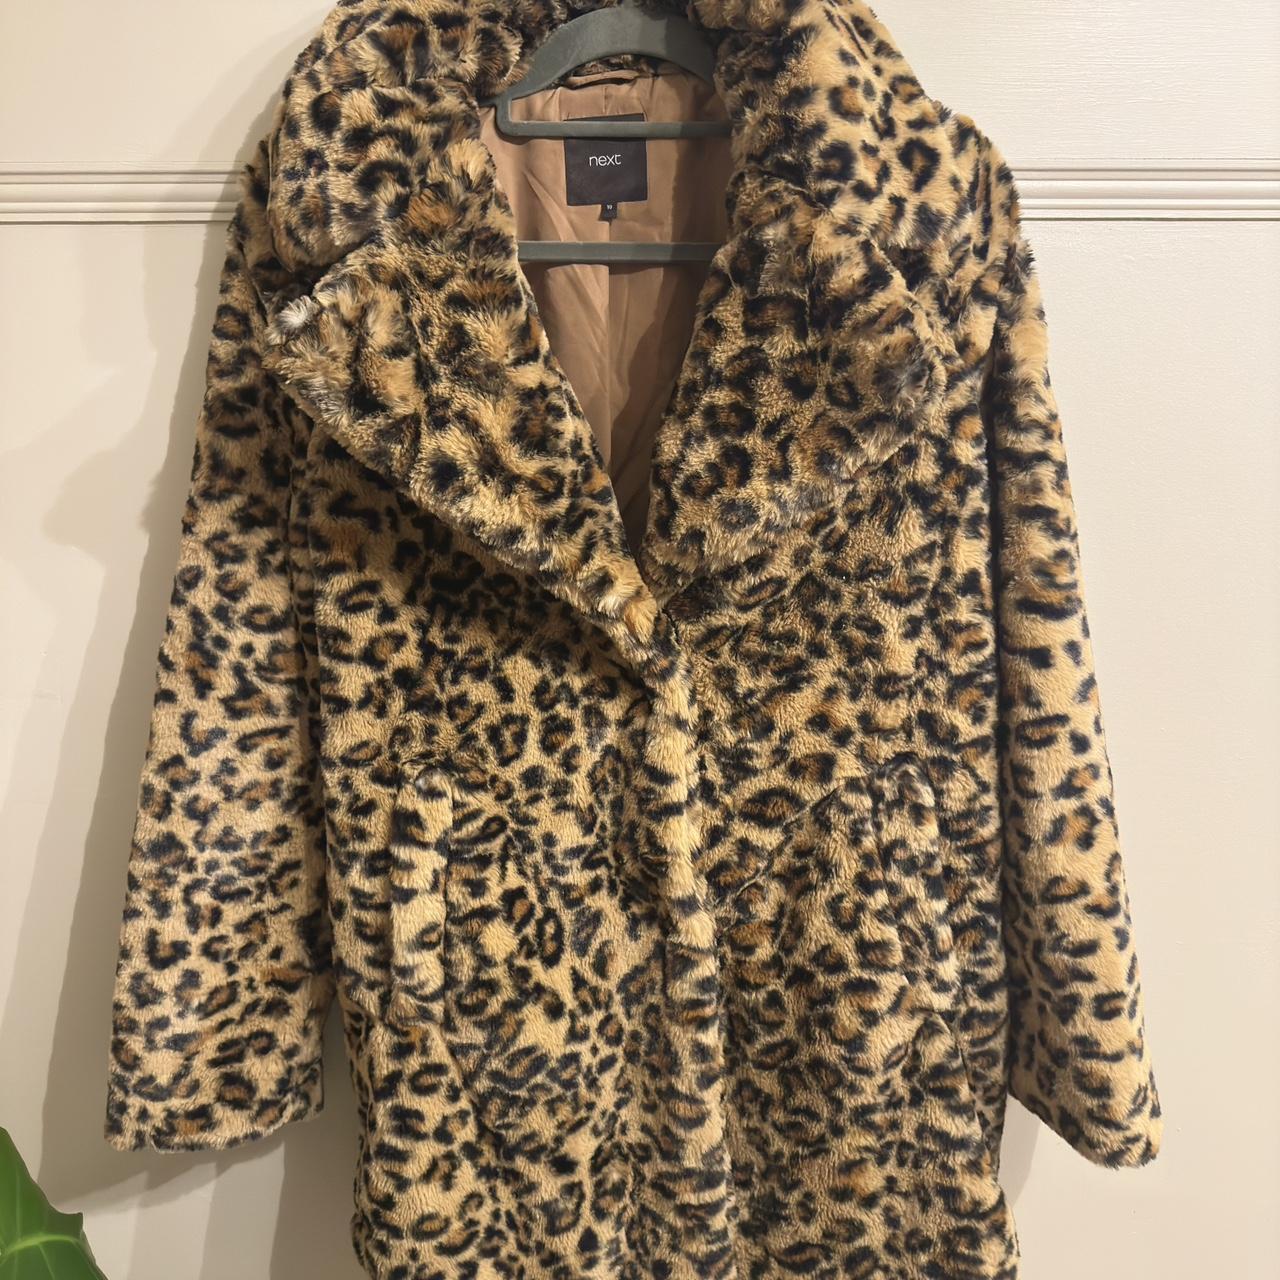 NEXT - women’s Leopard Print Faux fur Jacket. SIZE... - Depop